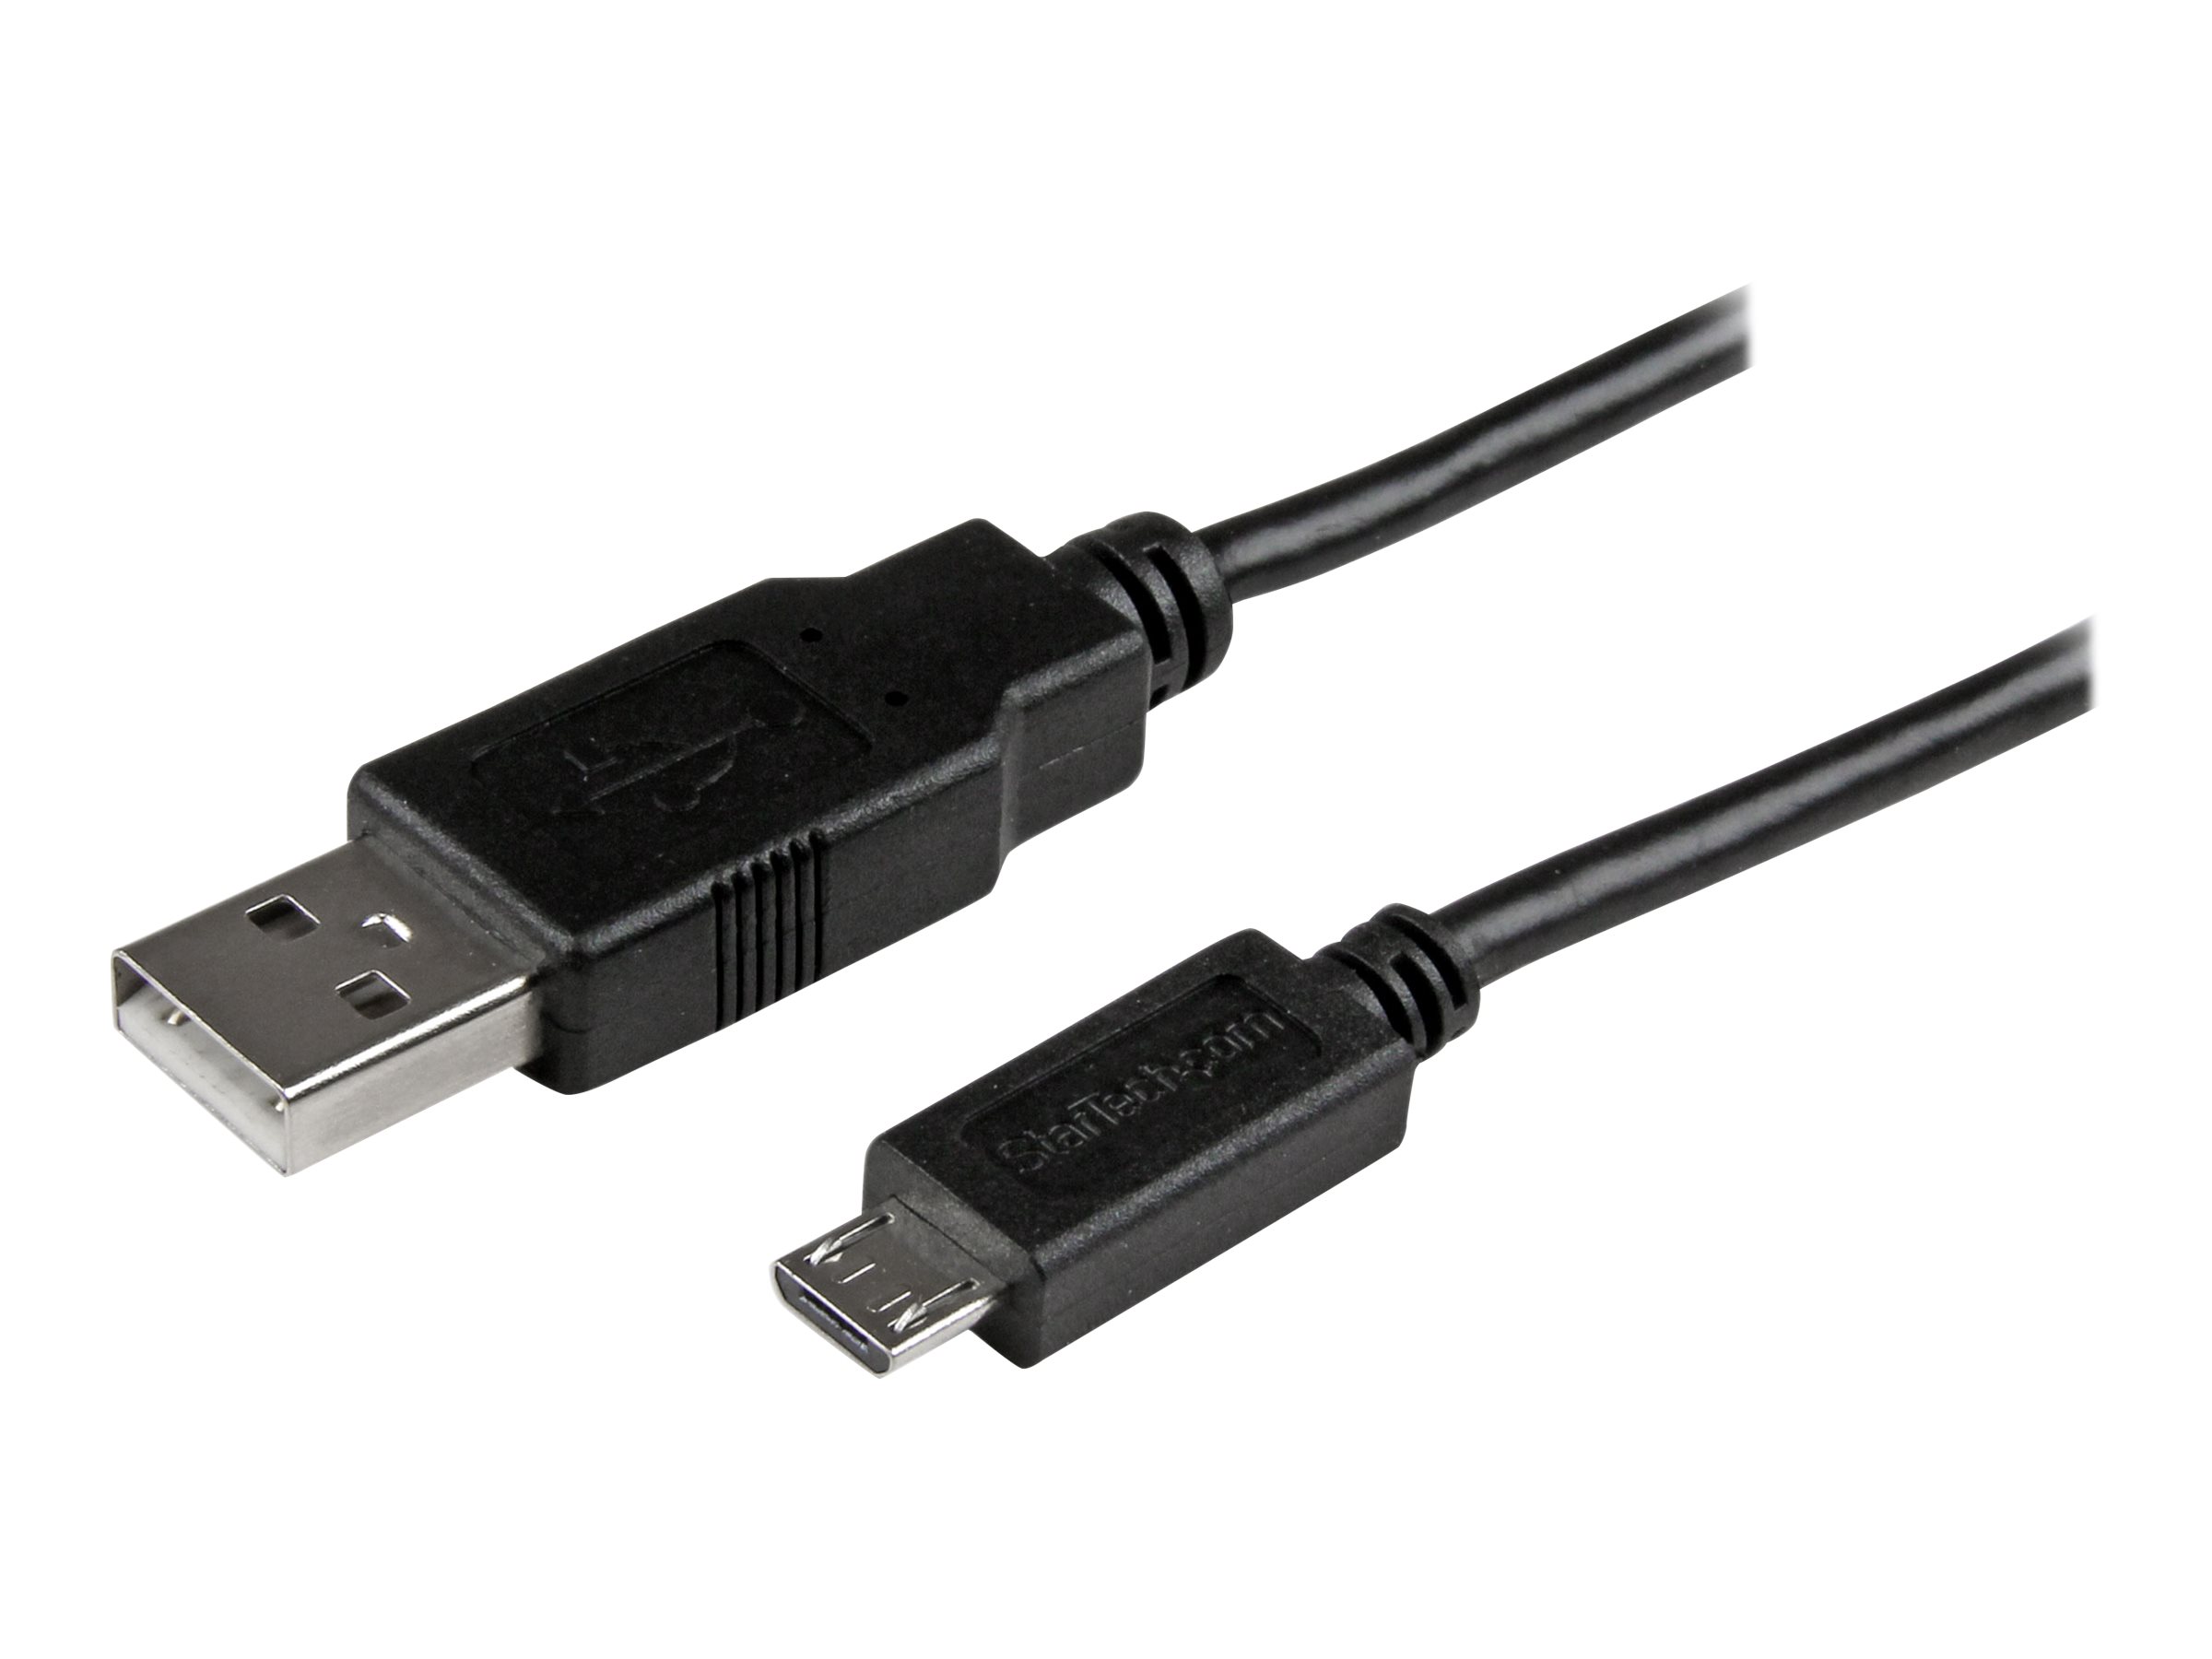 StarTech.com 15cm Micro USB-Kabel - USB A auf Micro B Anschlusskabel - USB-Kabel - Micro-USB Typ B (M) zu USB (M) - USB 2.0 - 15